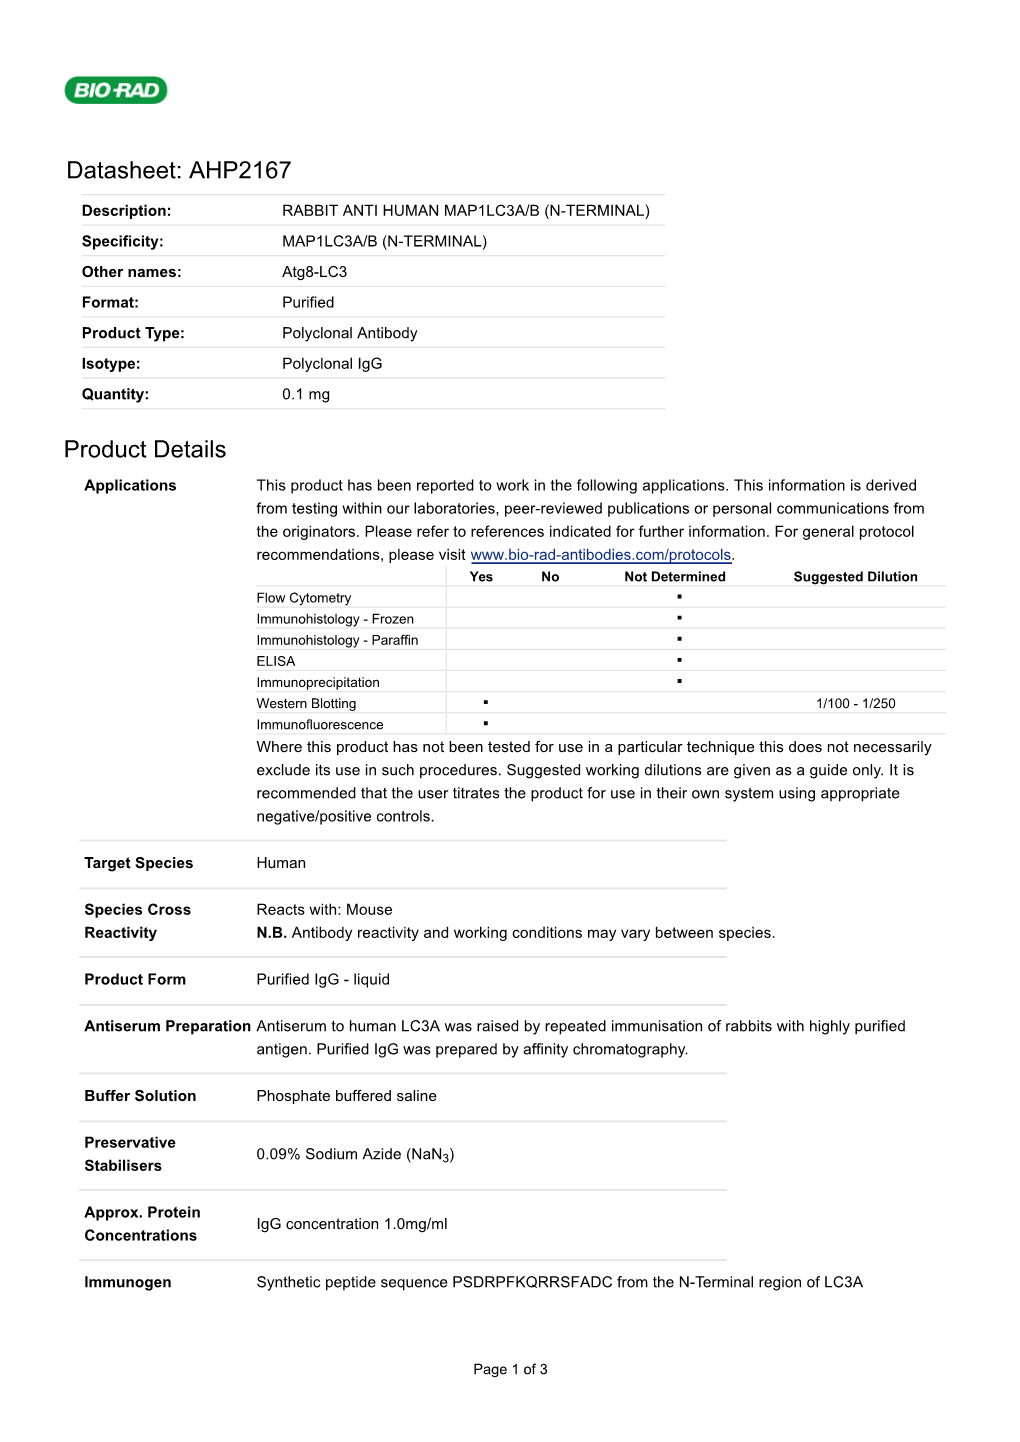 Datasheet: AHP2167 Product Details